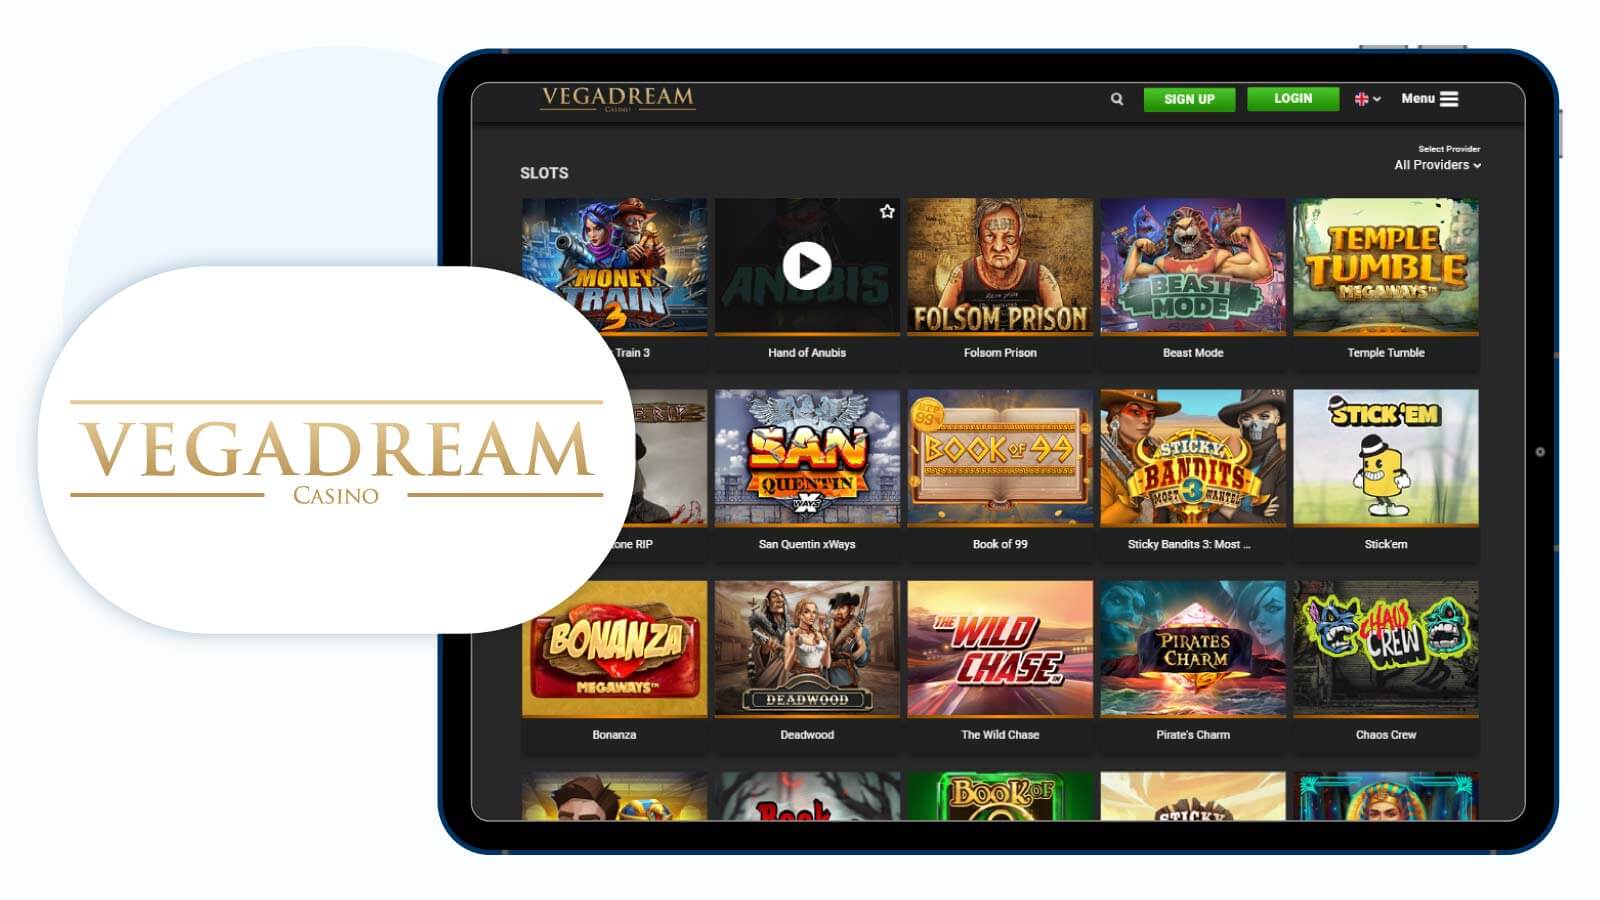 VegaDream-Casino-Top-Microgaming-Casino-for-the-Largest-Mega-Moolah-Progressive-Slot-Selection